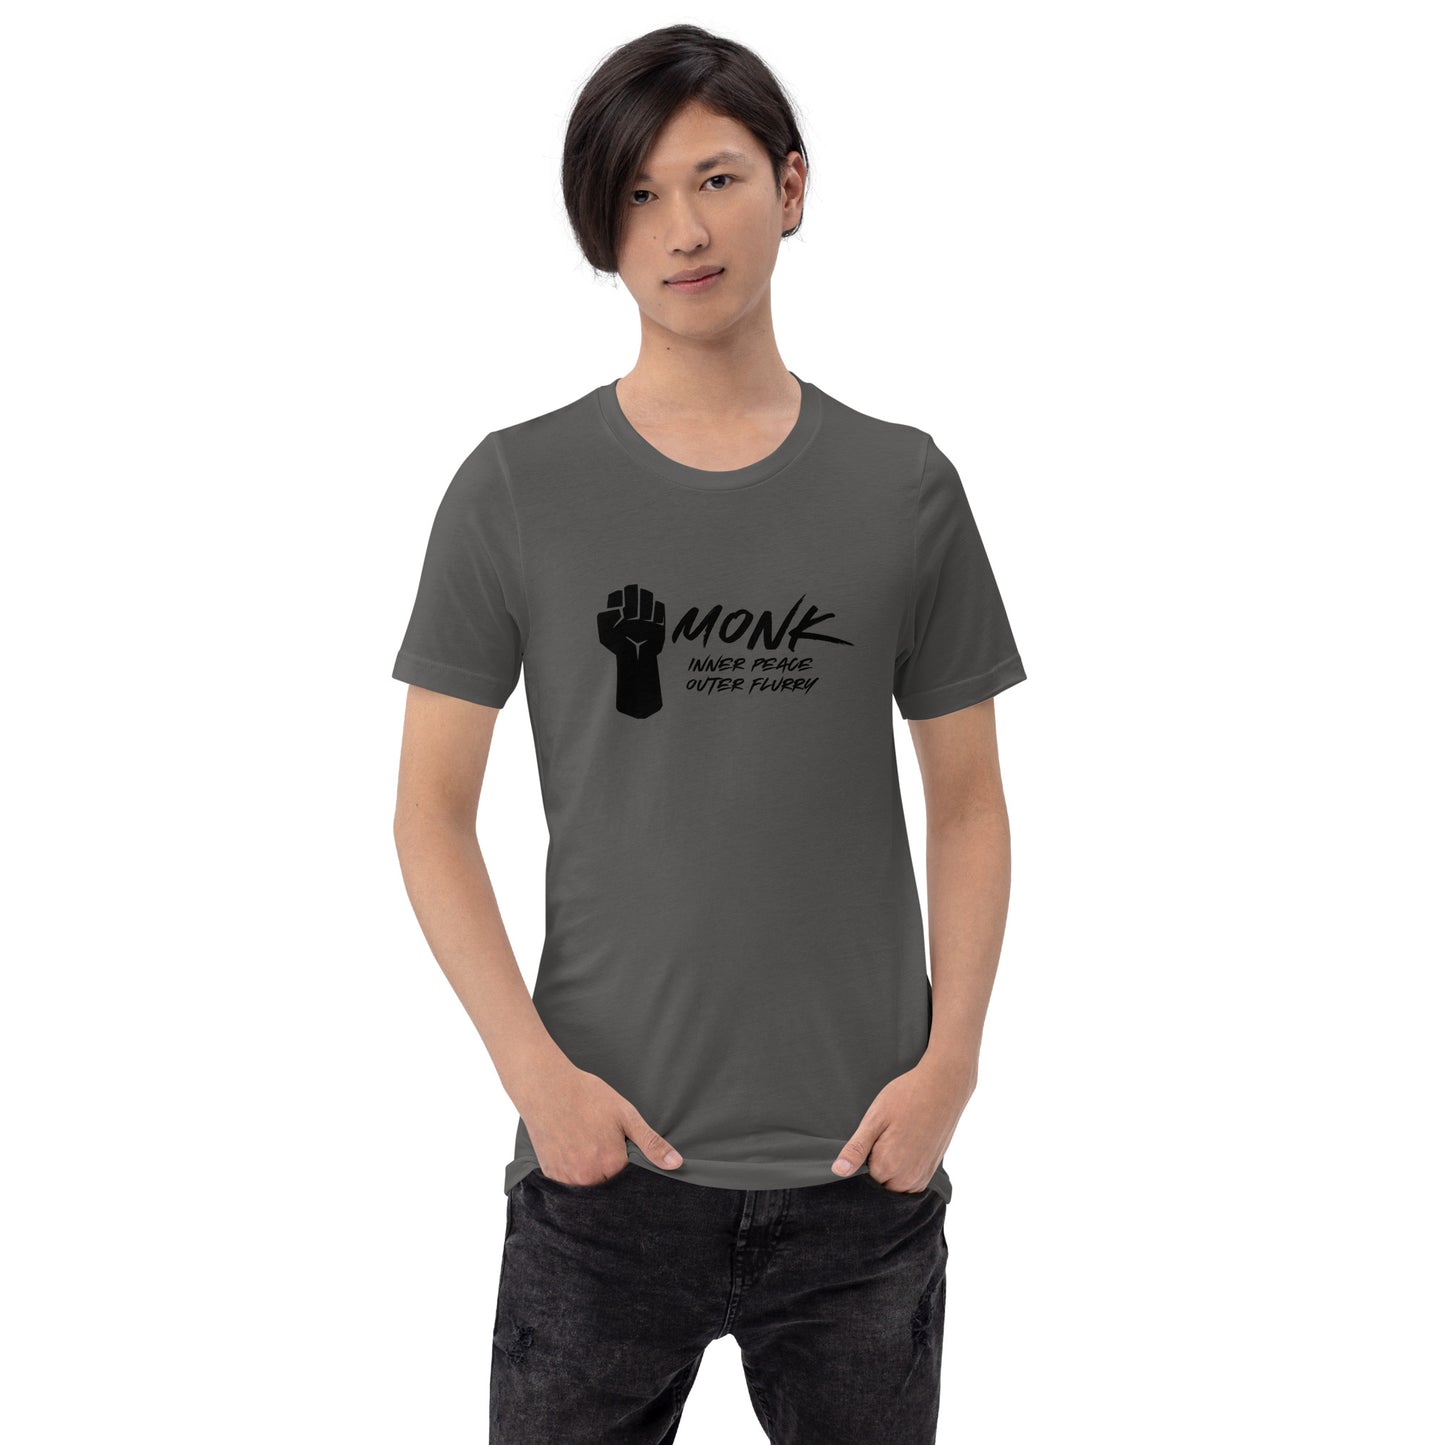 MONK inner peace outer flurry - Unisex t-shirt